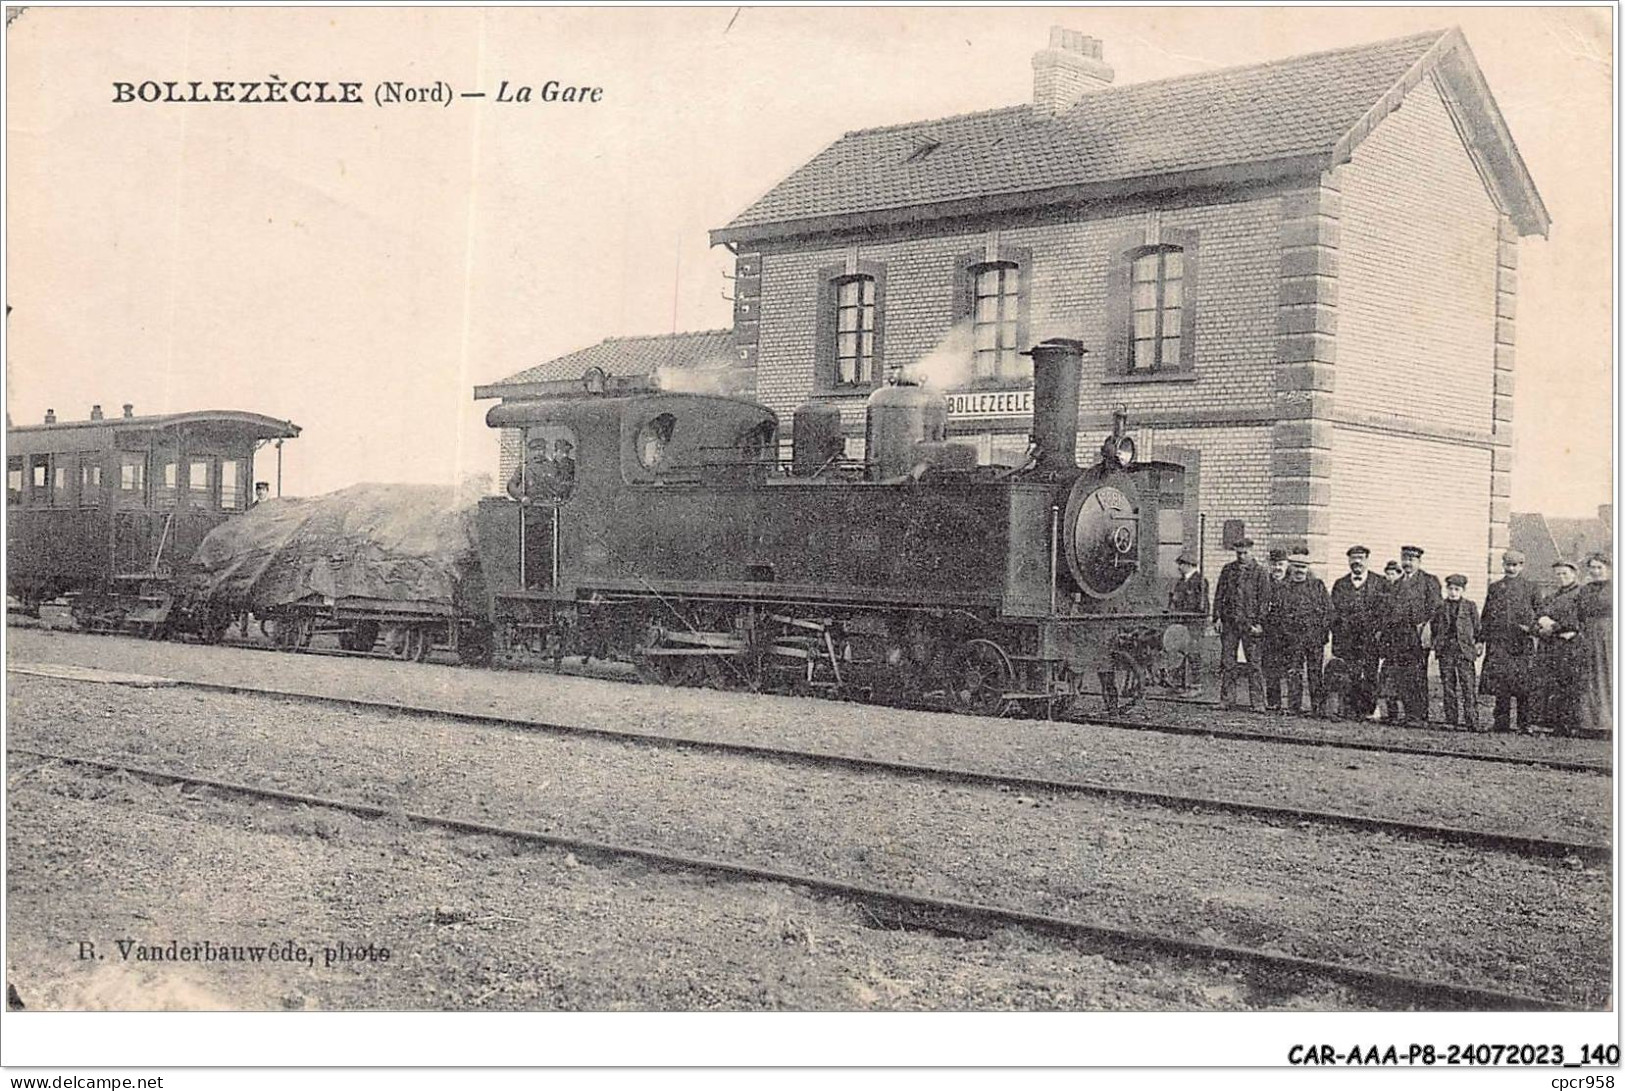 CAR-AAAP8-59-0602 - BOLLEZECLE - La Gare - Train - Dunkerque